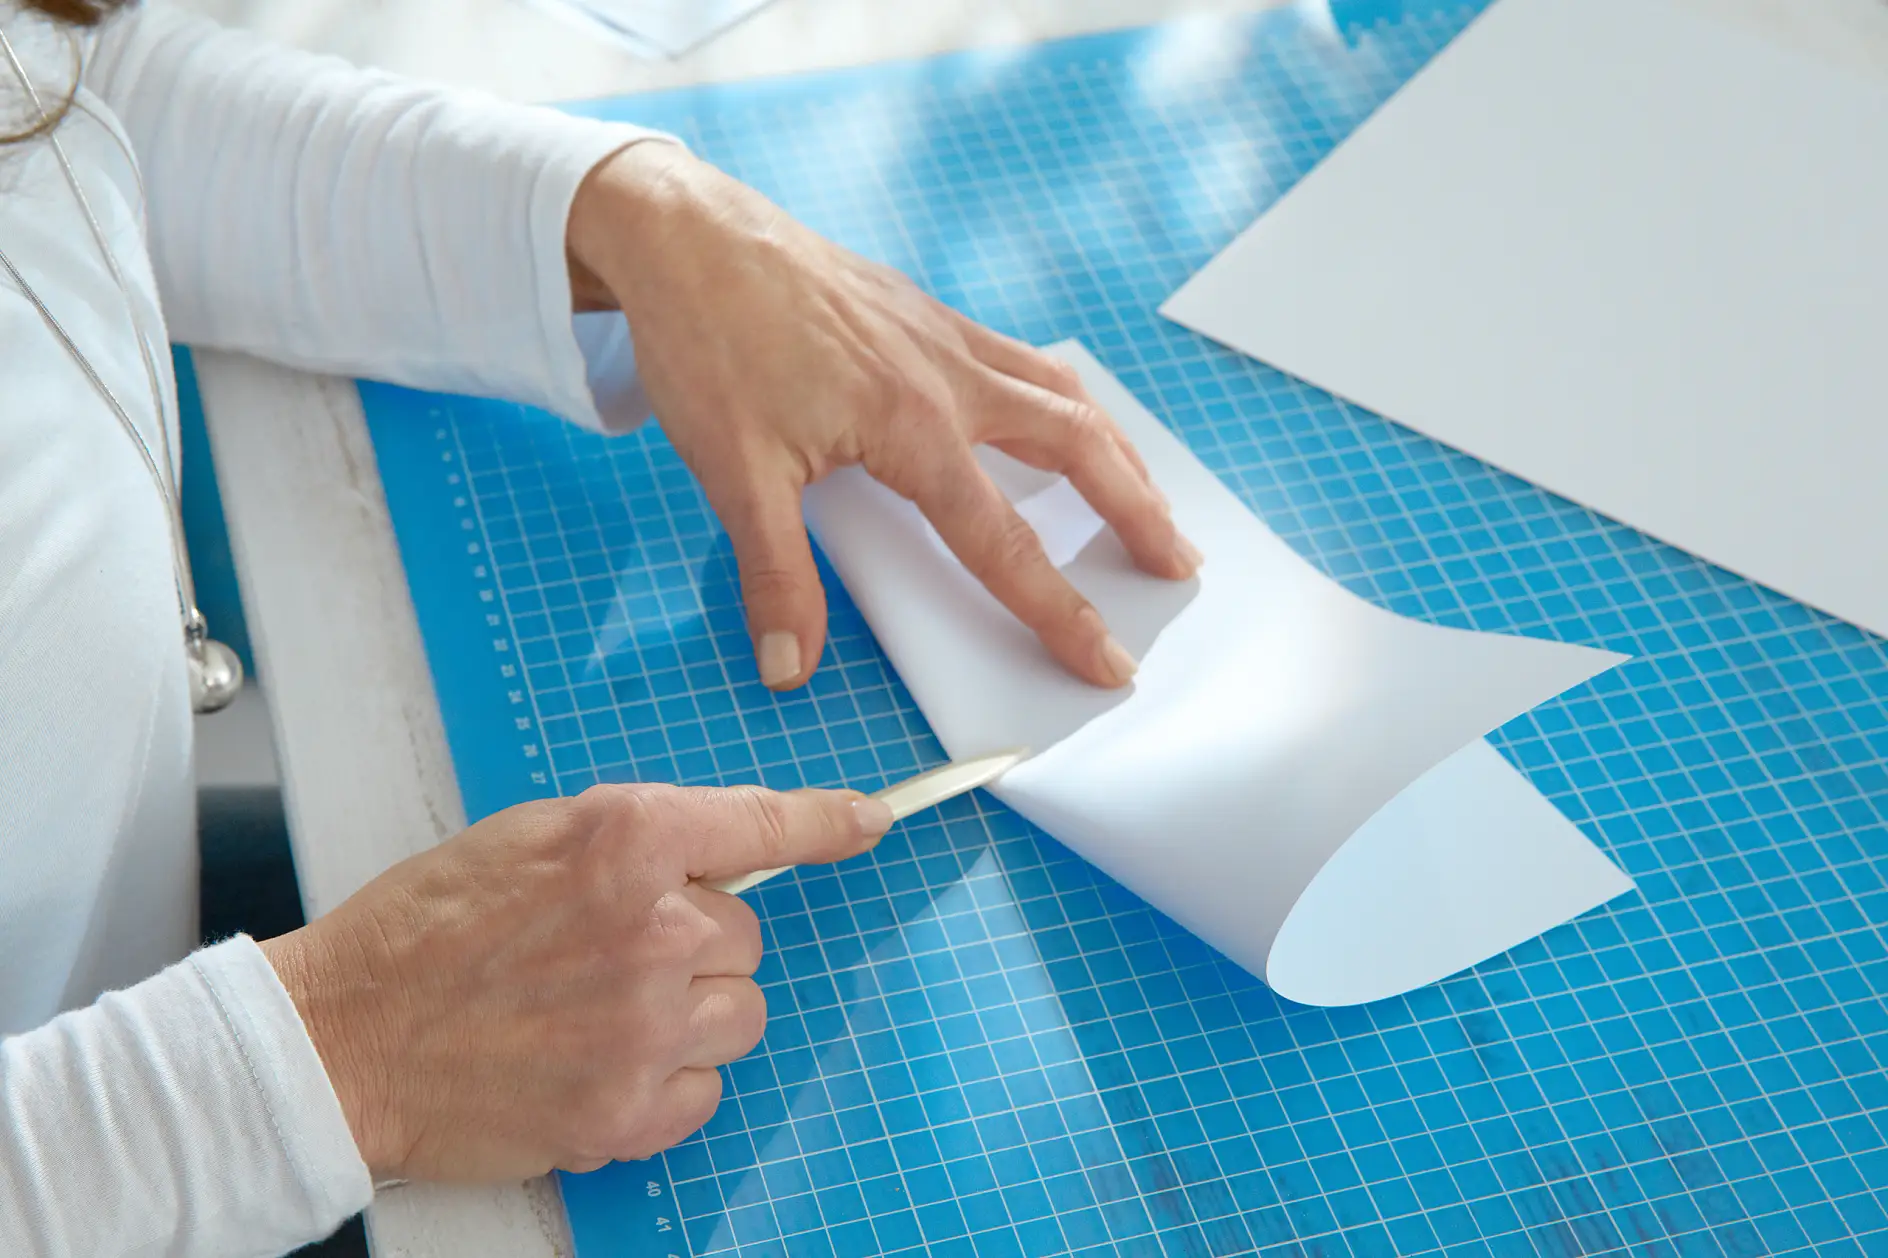 DIY Paper Stars / Step 2: Cut paper to size